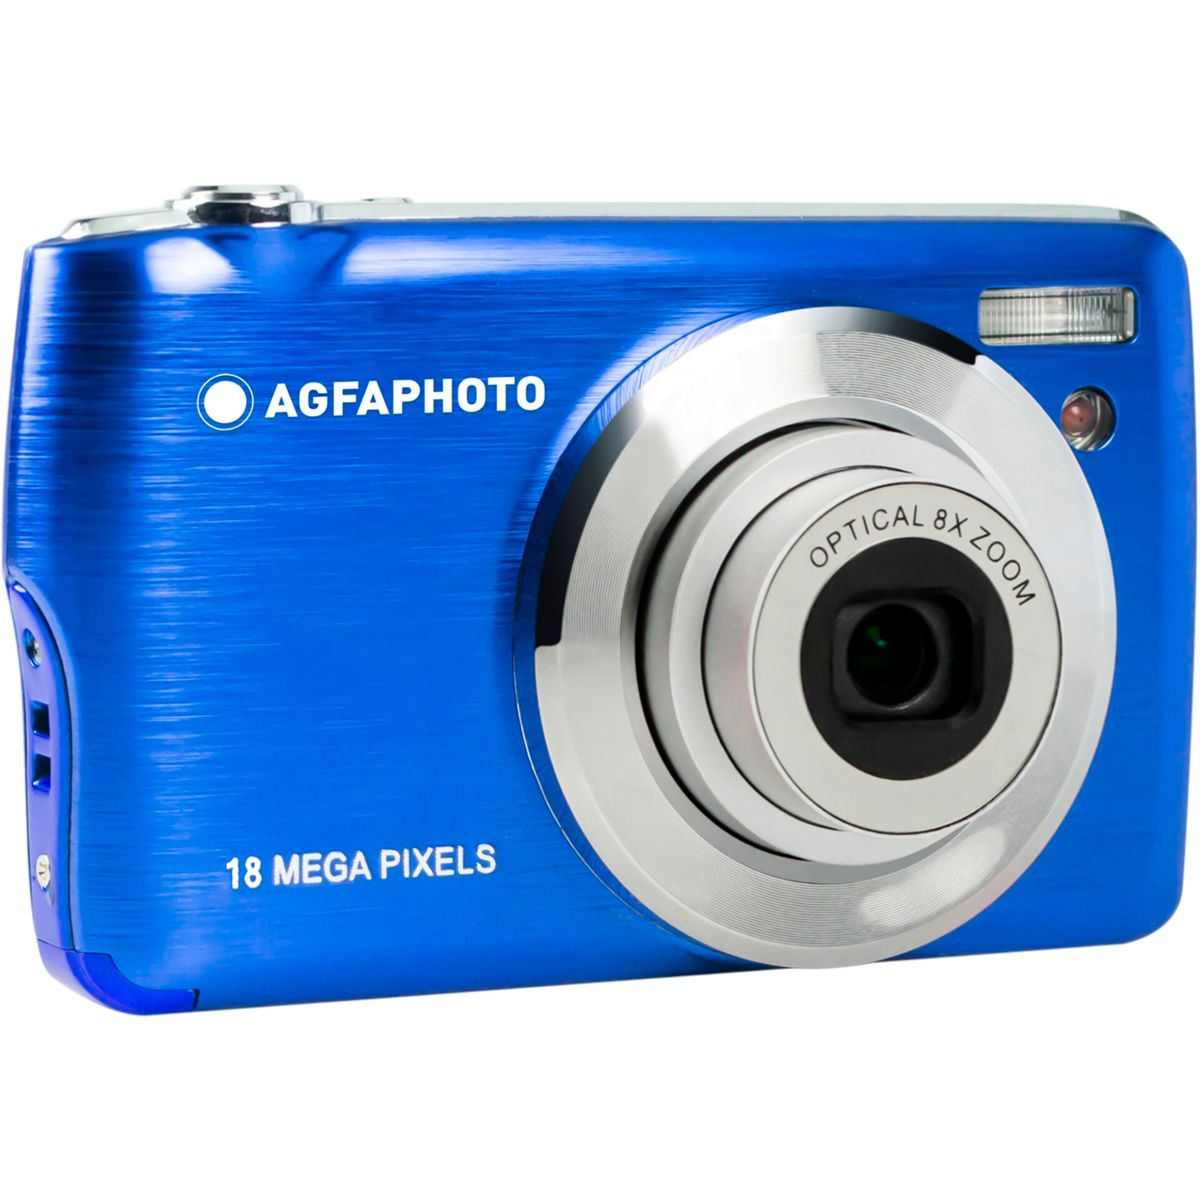 opt. LCD Digitalkamera TFT- blau, DC8200 8 AGFAPHOTO mit Realishot LCD-Backlight x Zoom, blau